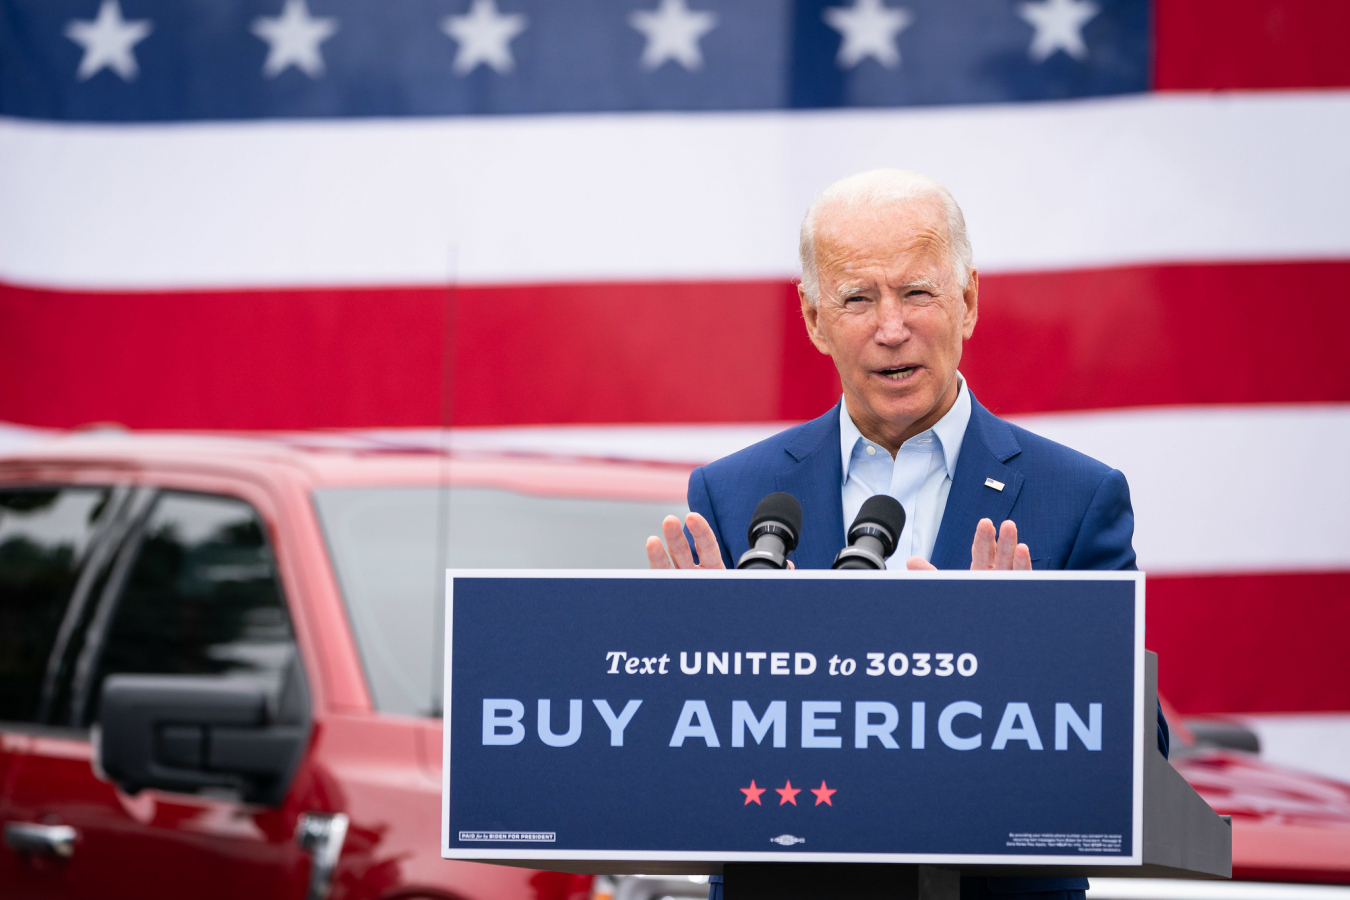 Joe Biden Made in America speech 9 September 2020